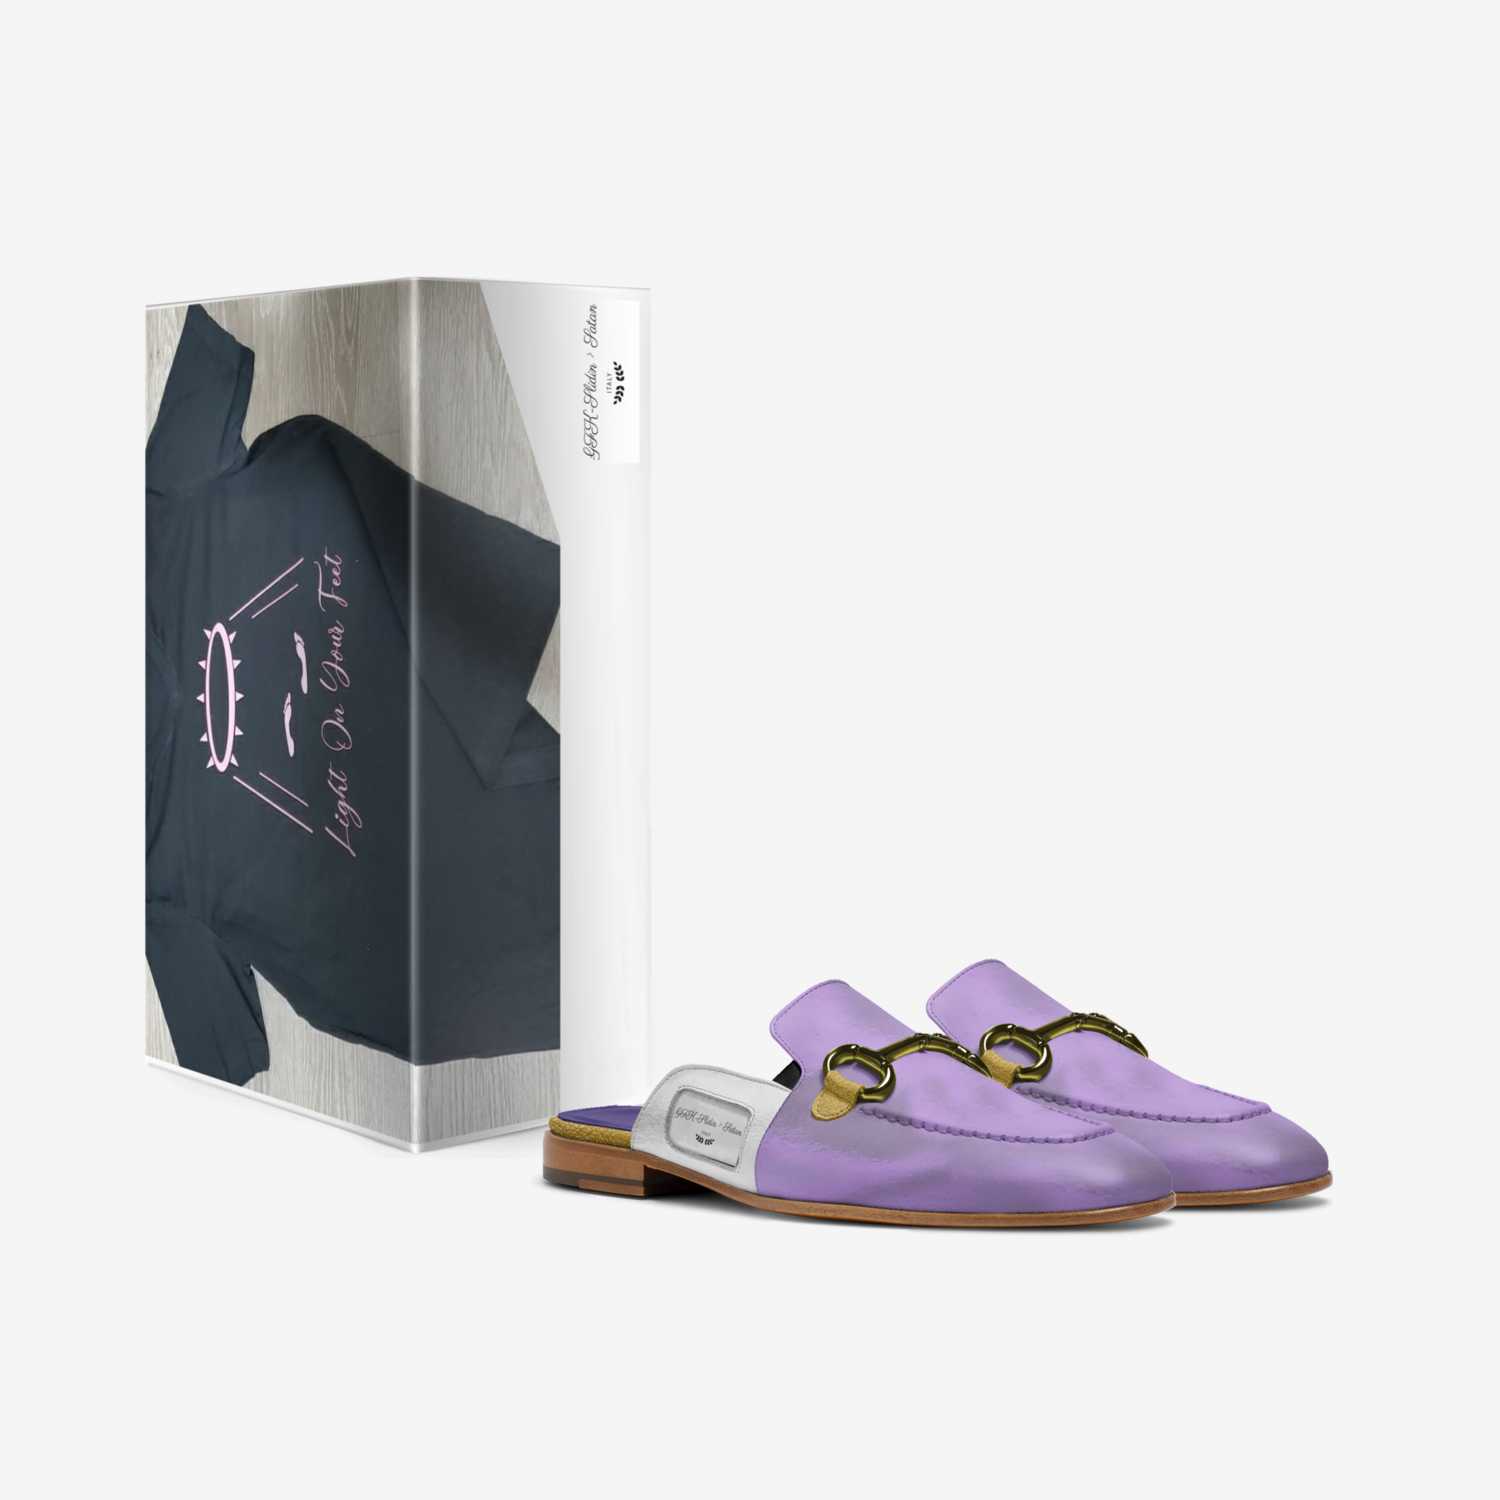 GFK-Slidin > Satan custom made in Italy shoes by Aldric Horton Sr | Box view